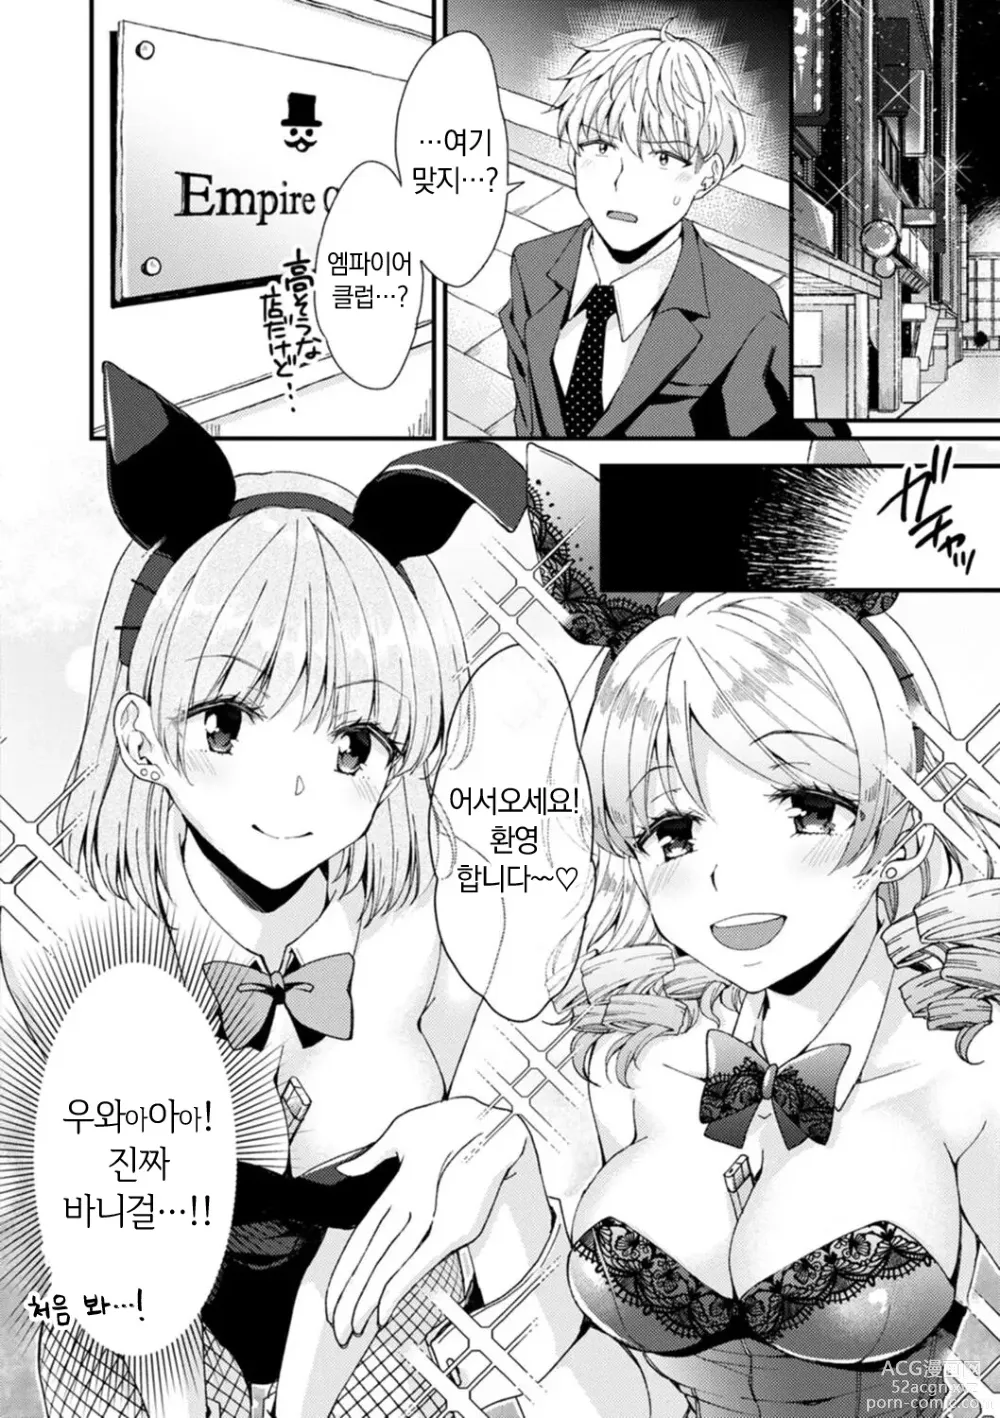 Page 8 of manga 취미가 바니걸이라니 정말이에요?